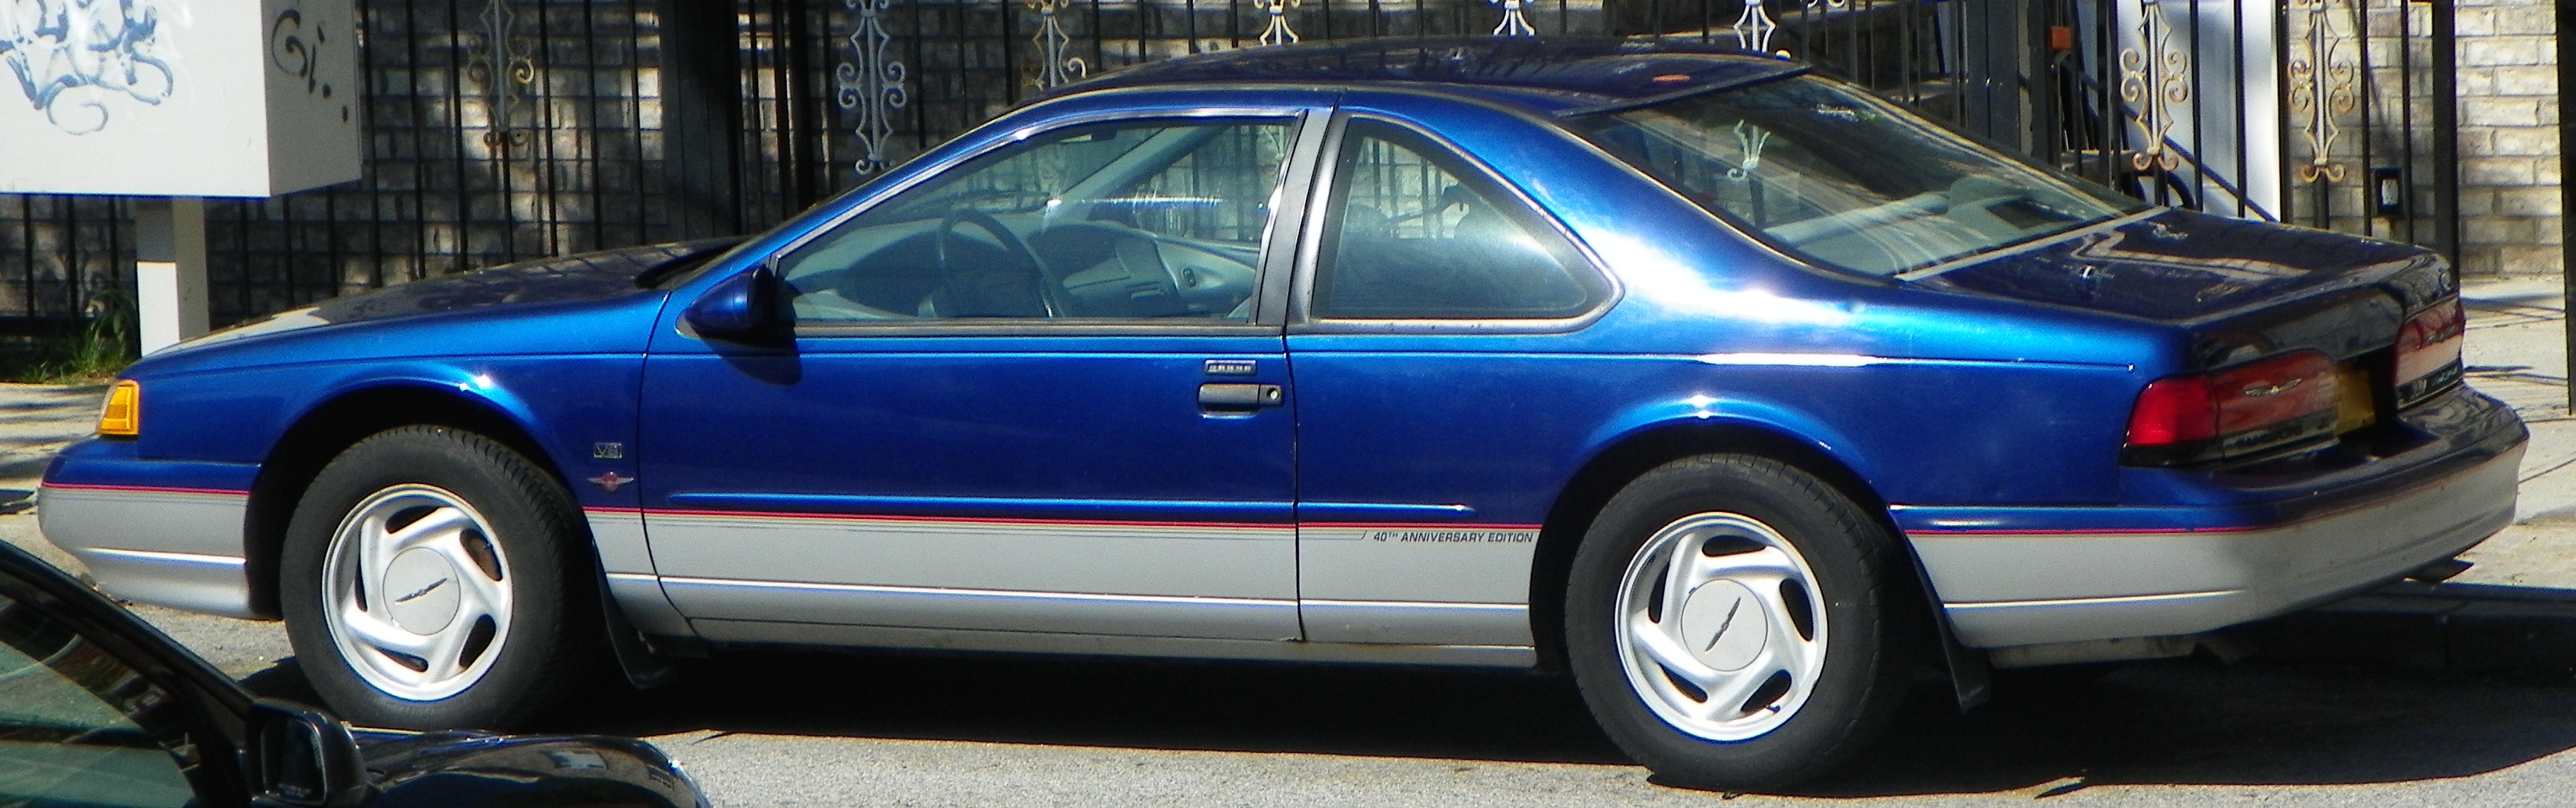 1995 Ford Thunderbird Anniversary Edition